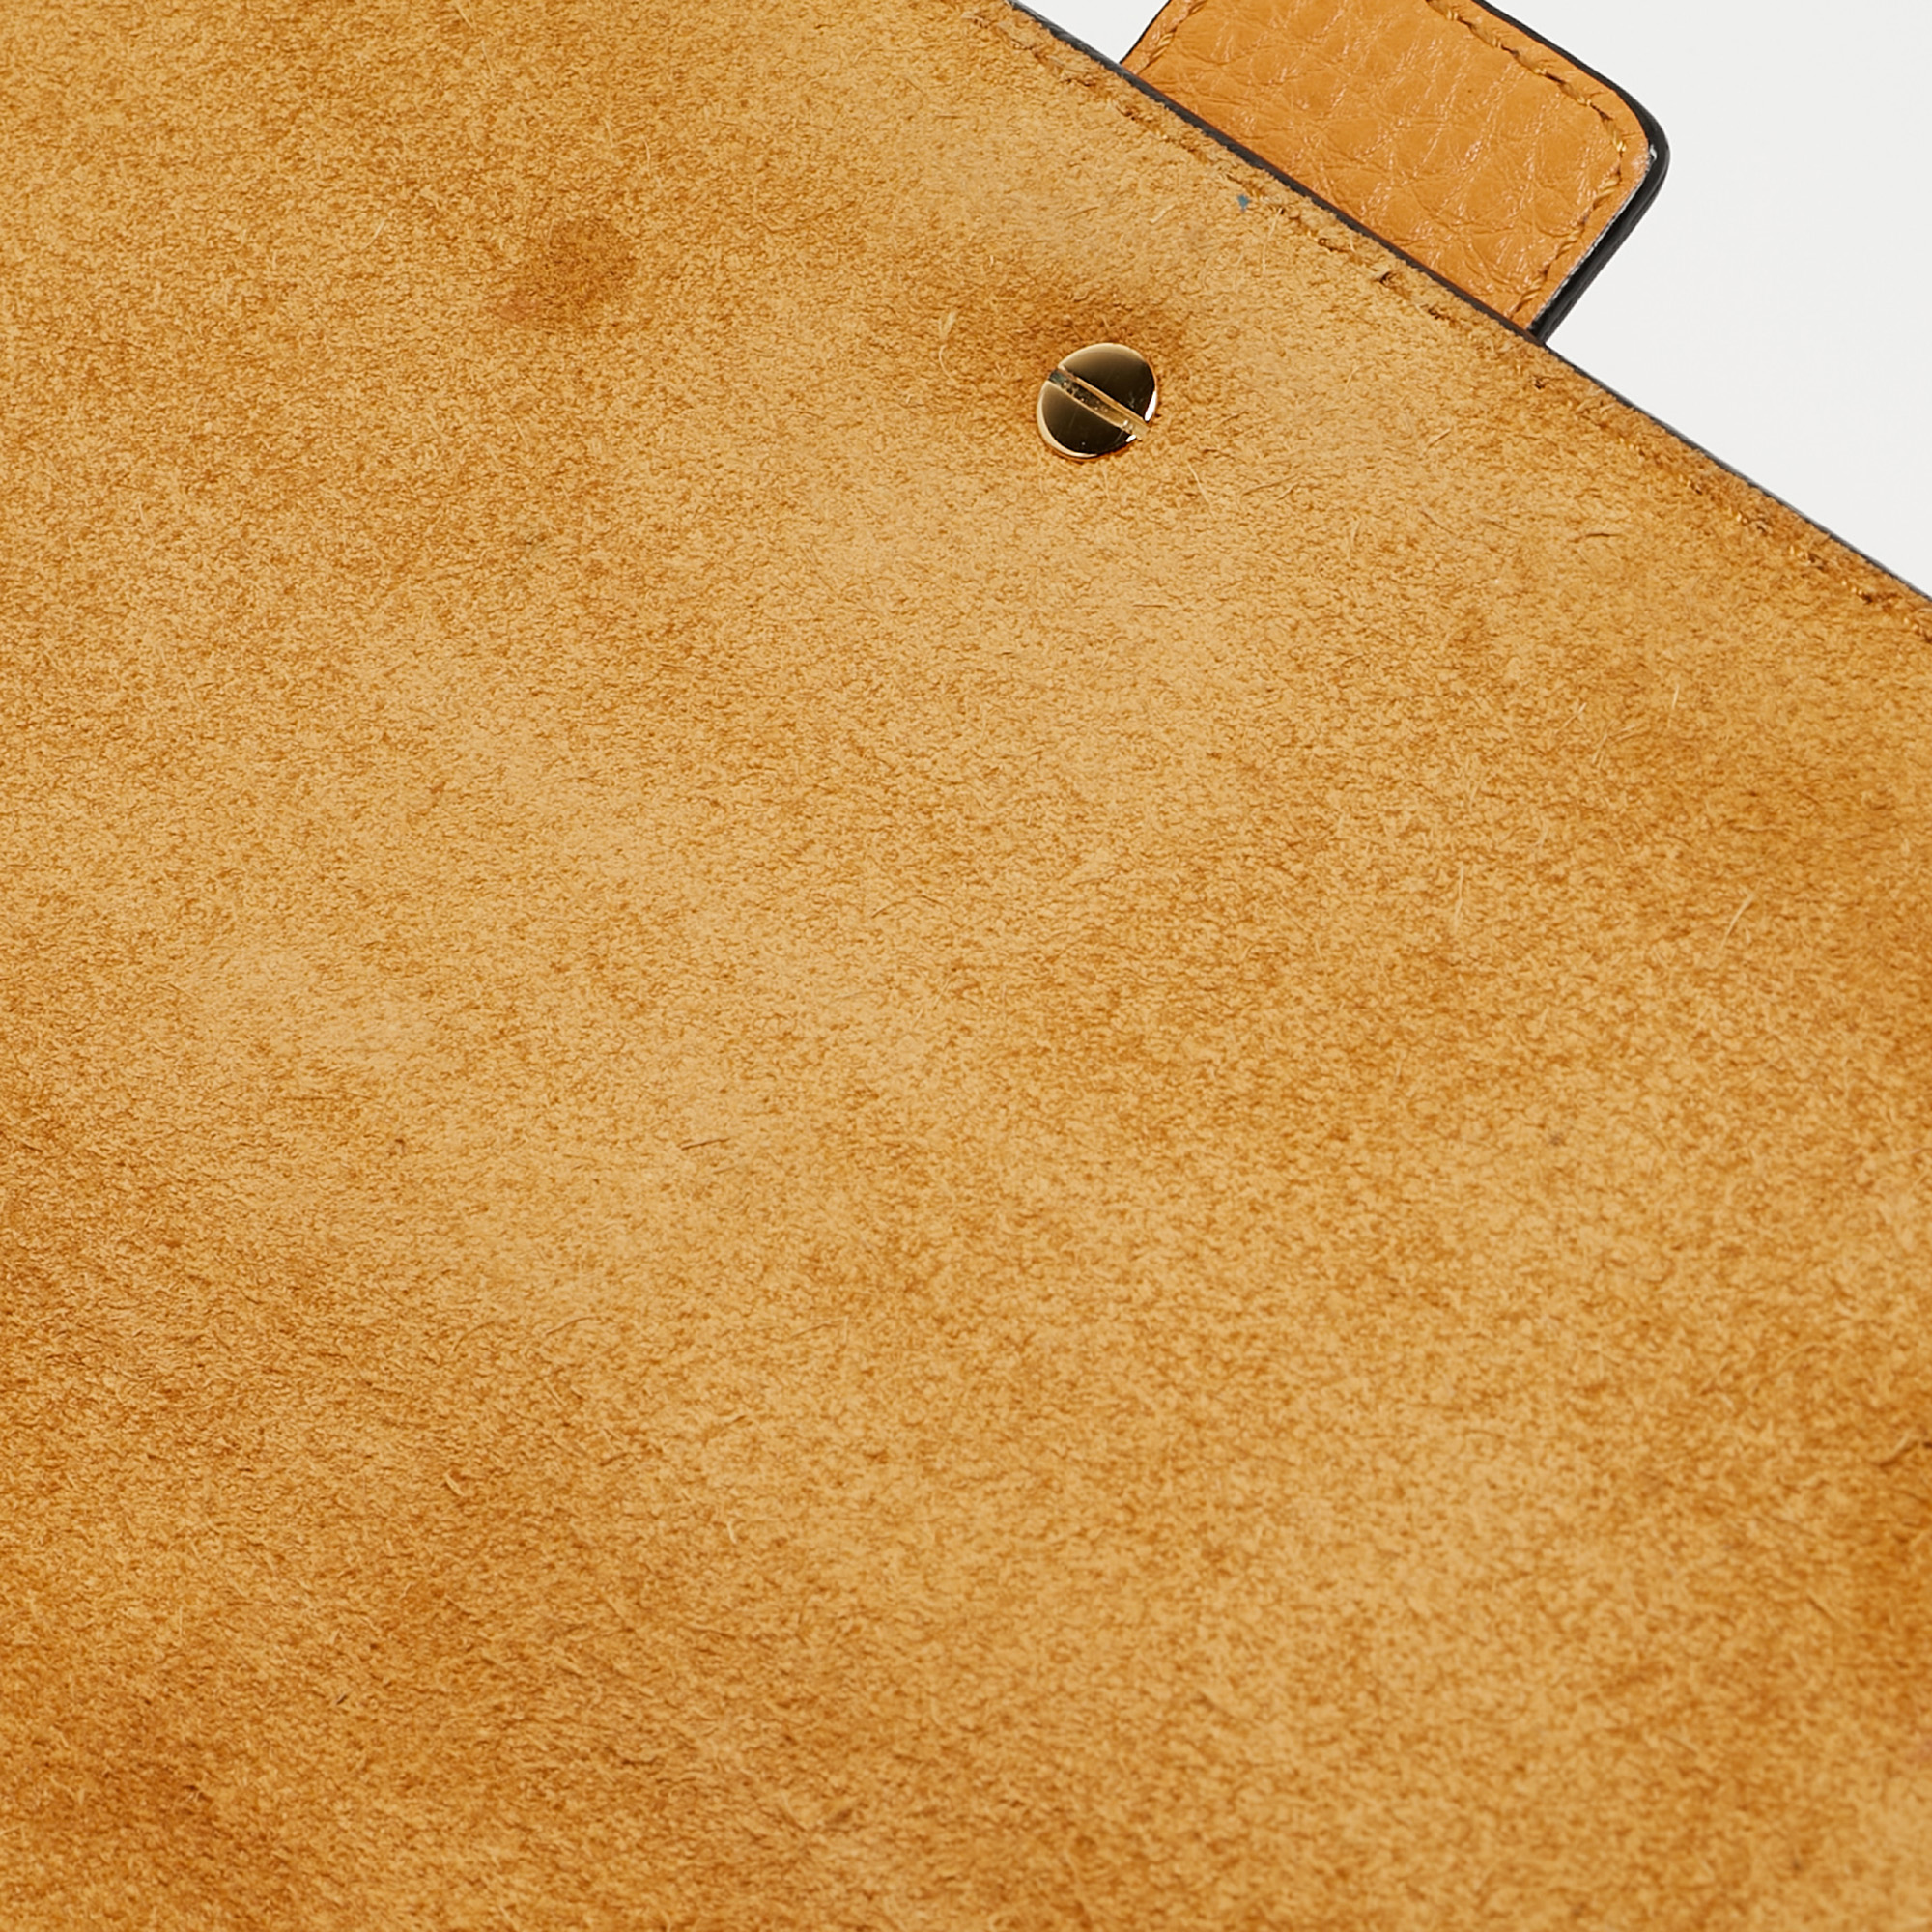 Valentino Mustard Yellow Leather Medium B-Rockstud Shoulder Bag